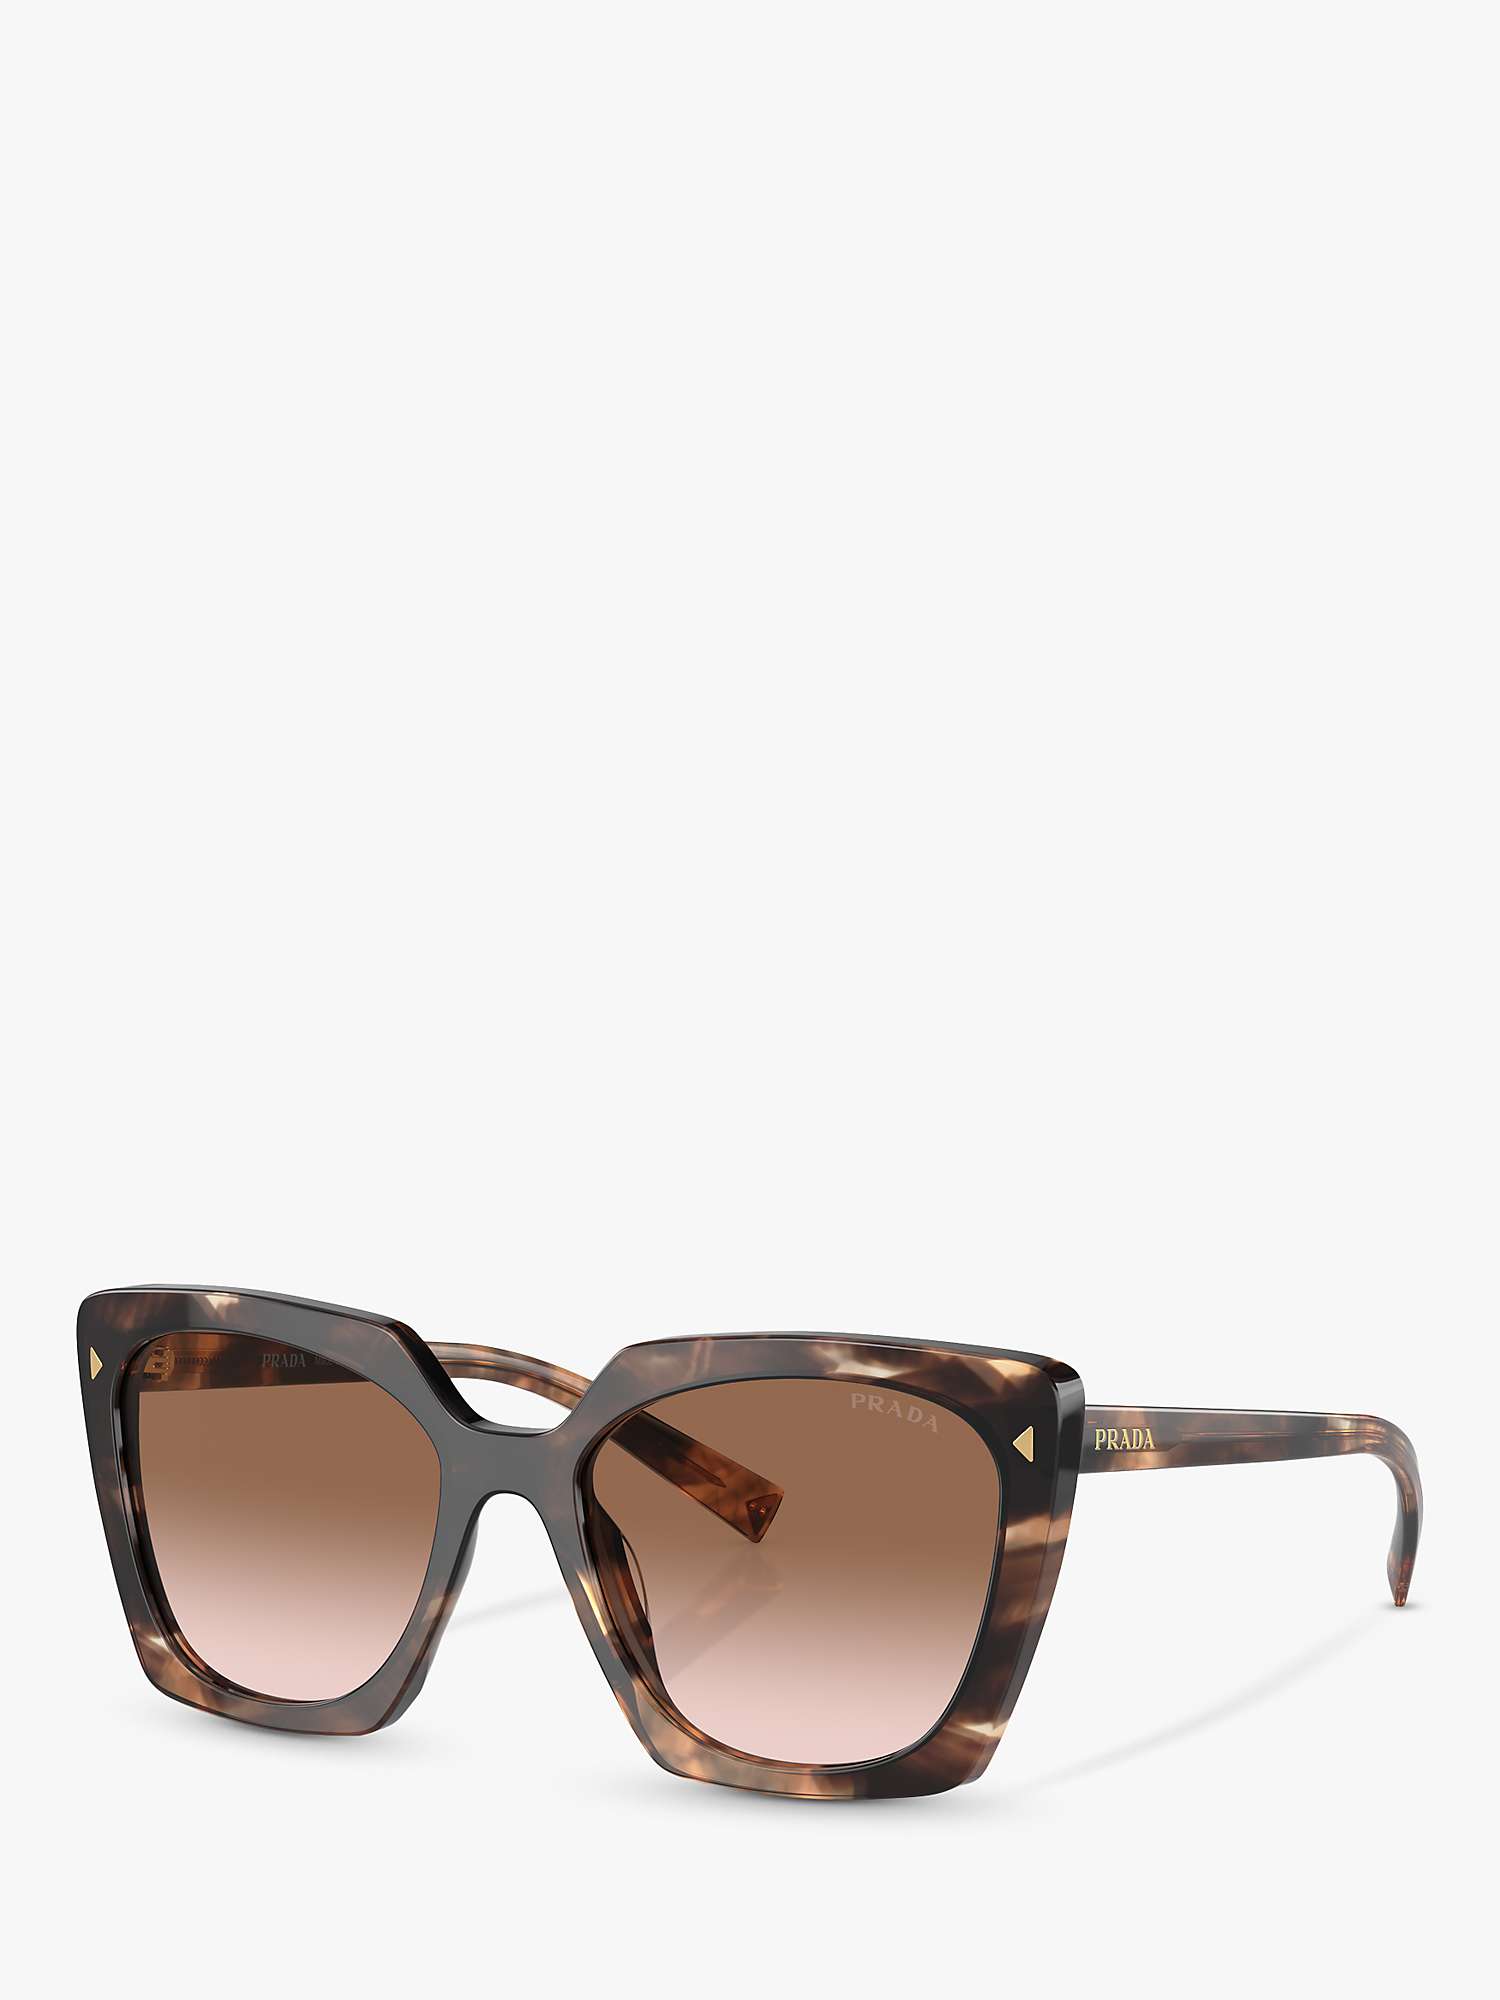 Buy Prada PR 23ZS Women's Square Sunglasses, Caramel Tortoise/Brown Gradient Online at johnlewis.com